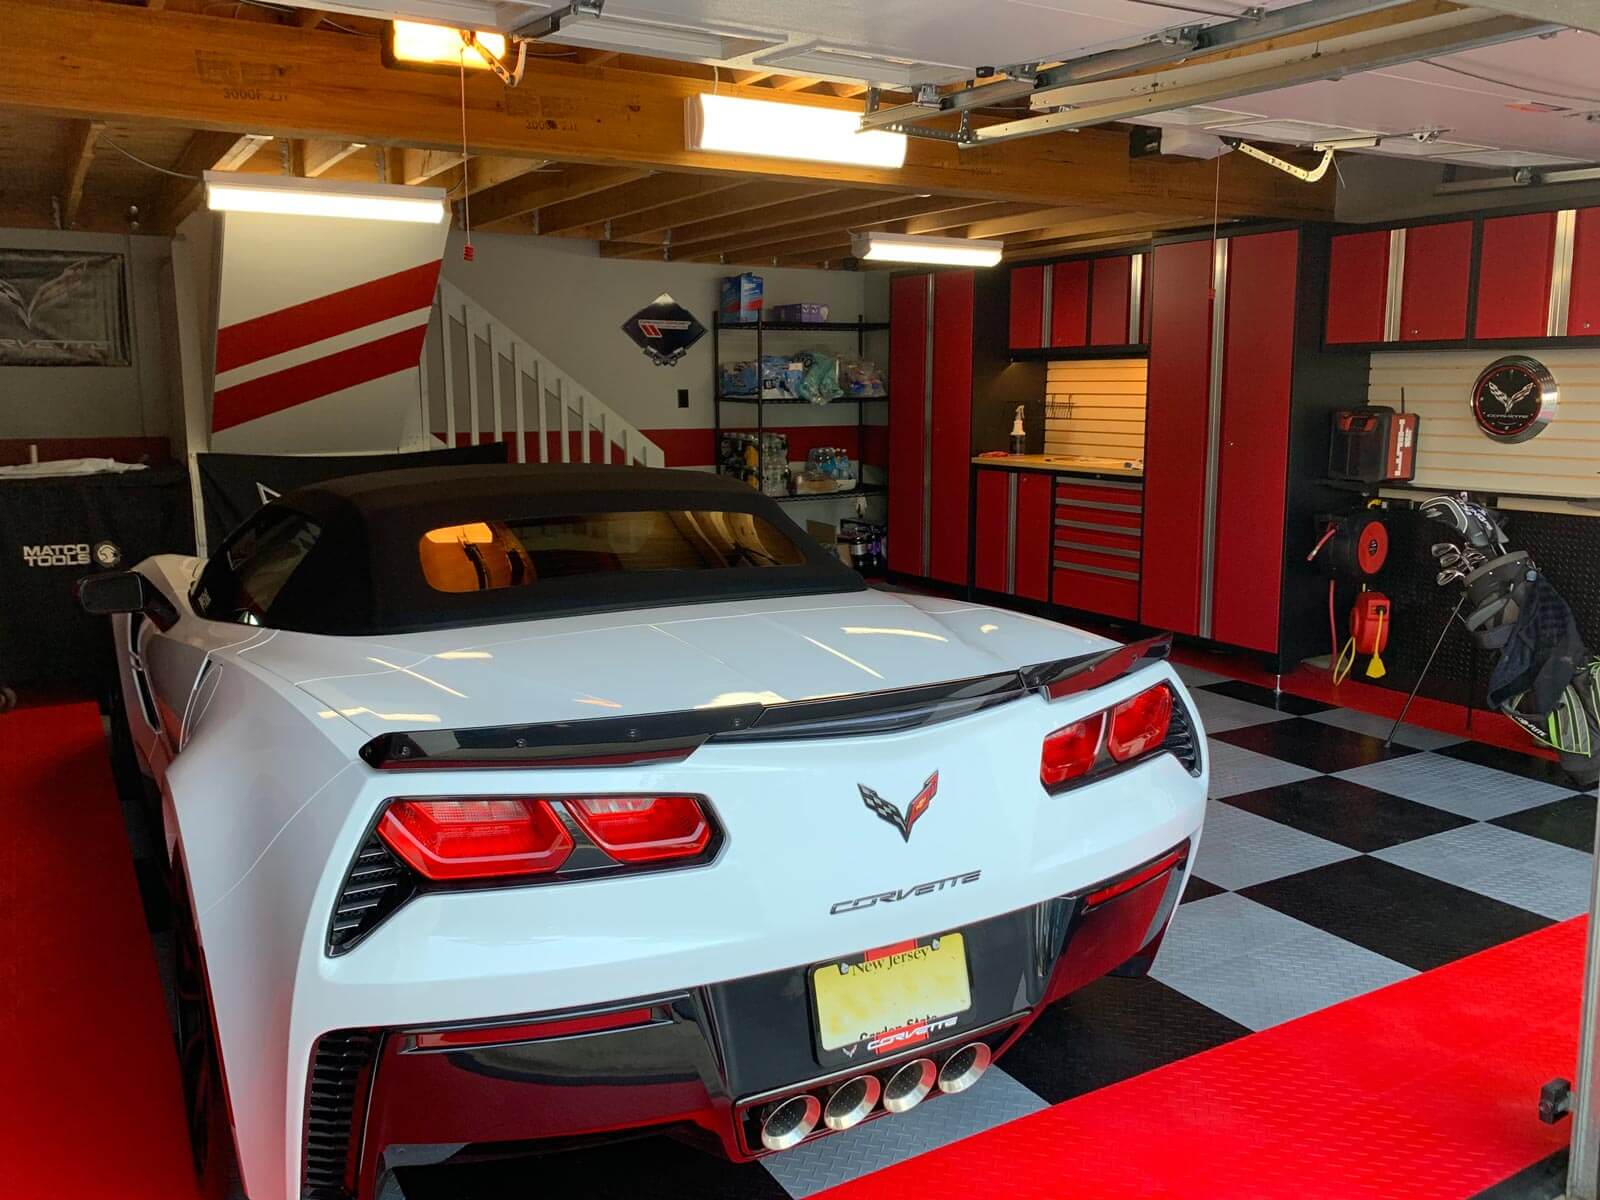 Jerome's Corvette and RaceDeck Diamond garage